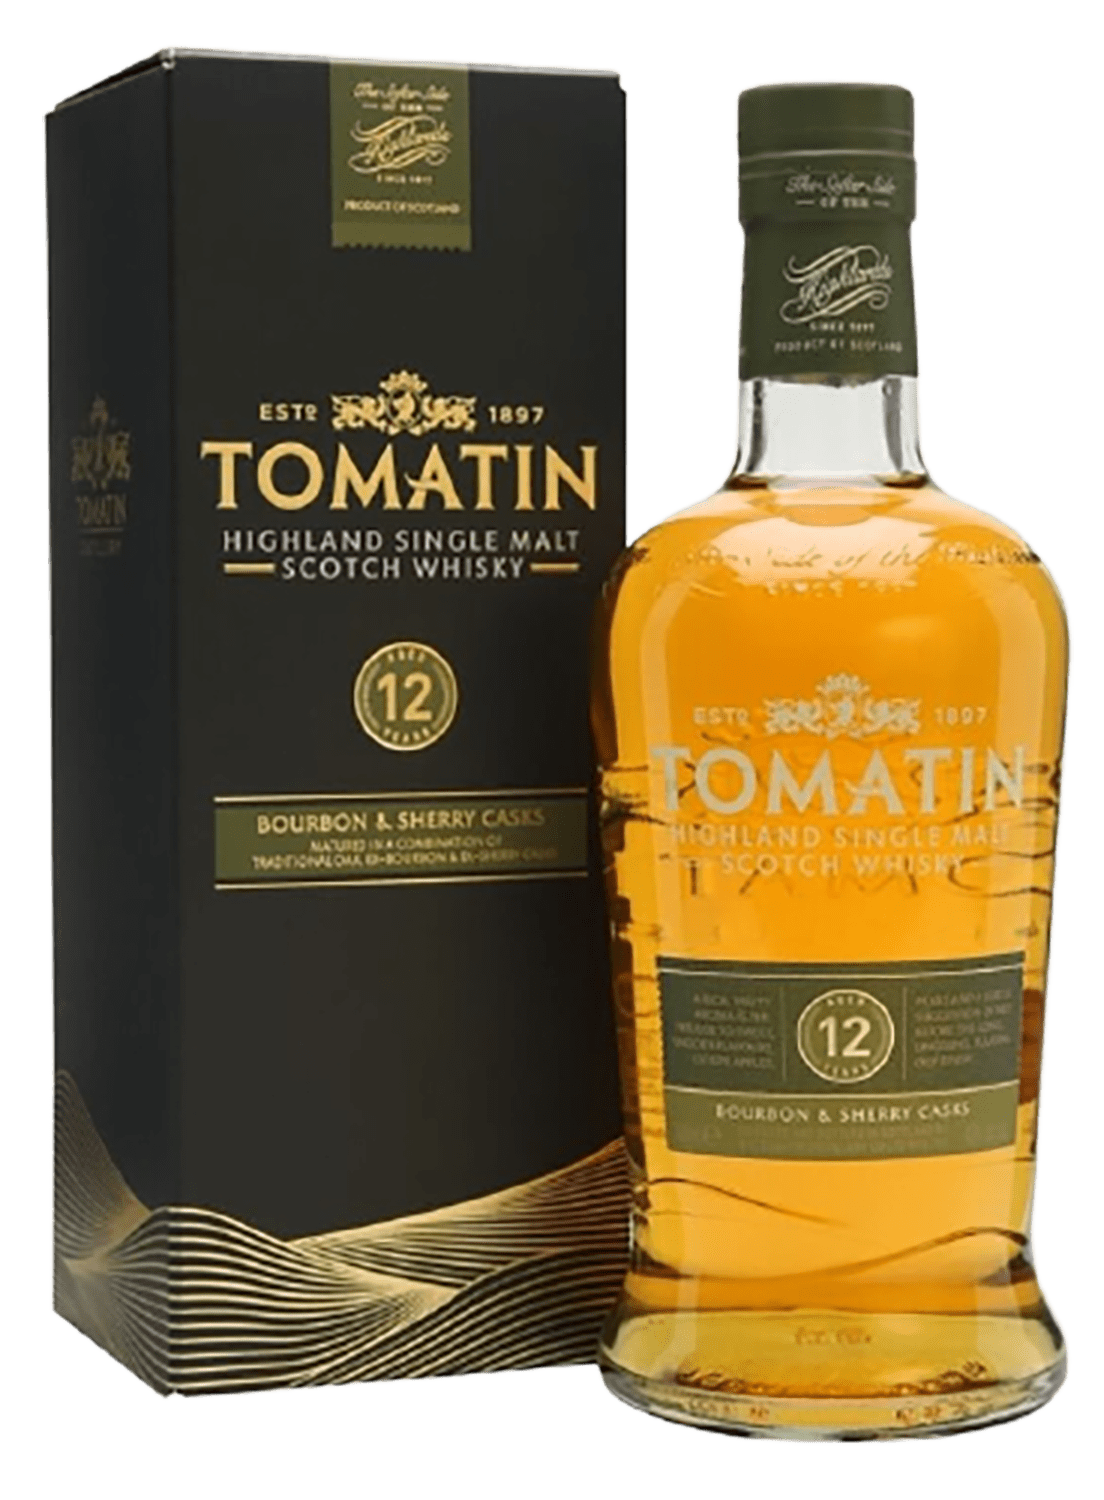 Tomatin Highland Single Malt Scotch Whisky 12 y.o. (gift box)